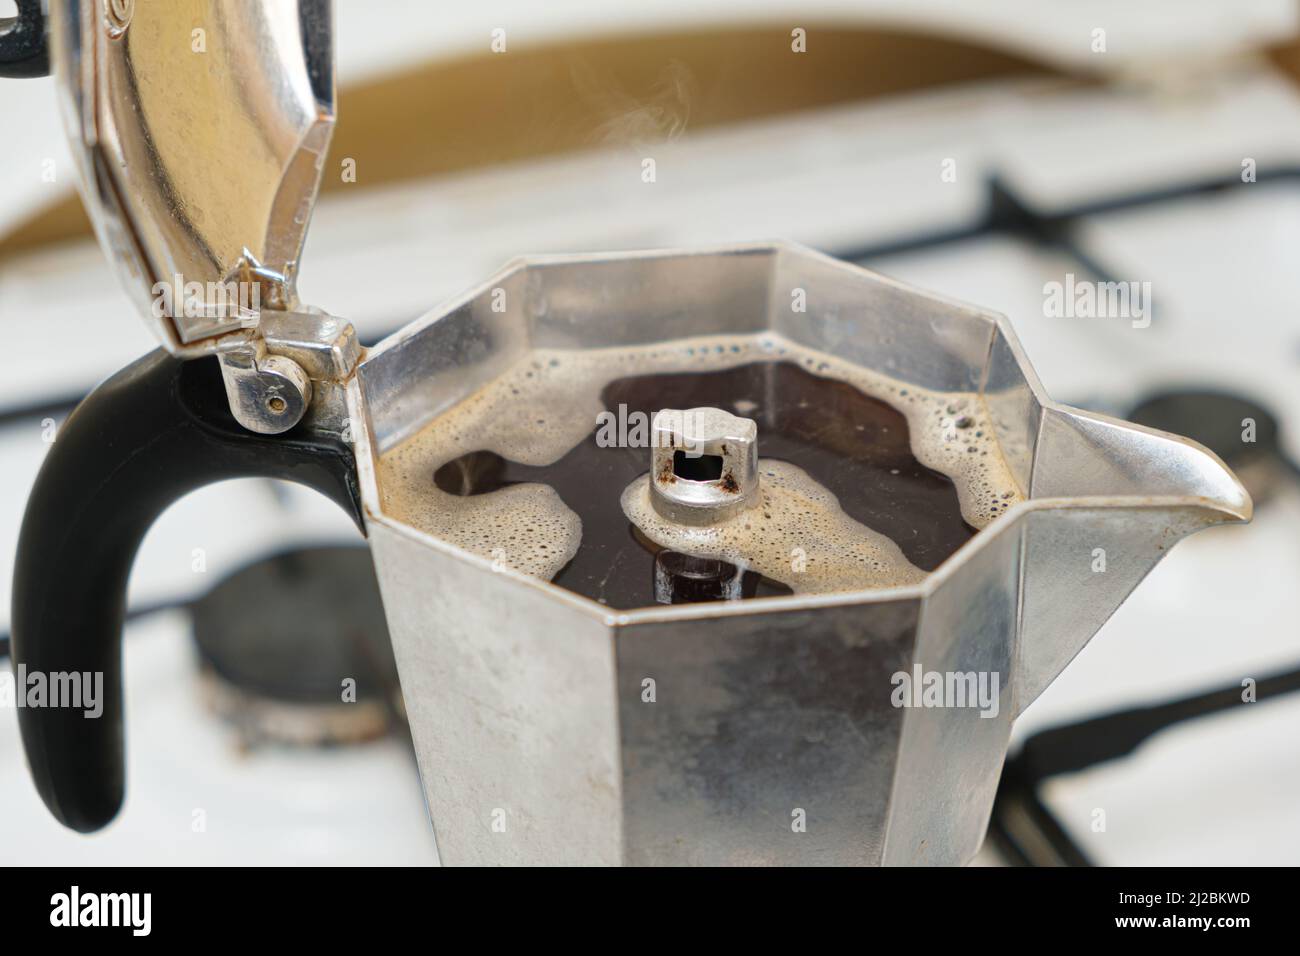 Large Soviet Geyser Coffee Maker. Espresso Coffee Maker